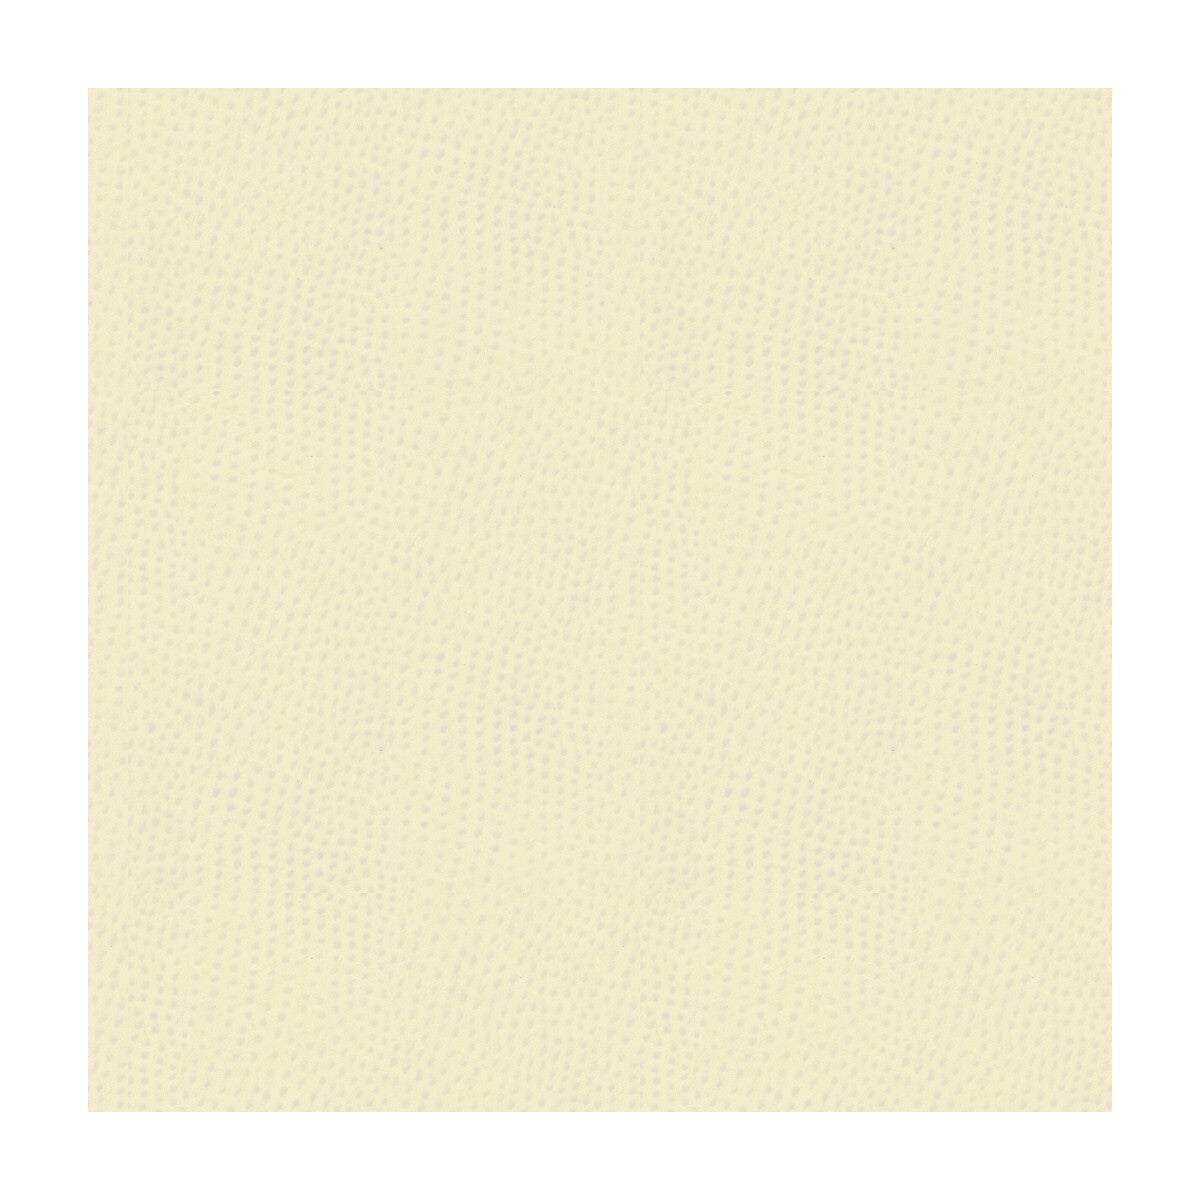 Kravet Contract fabric in belus-1 color - pattern BELUS.1.0 - by Kravet Contract